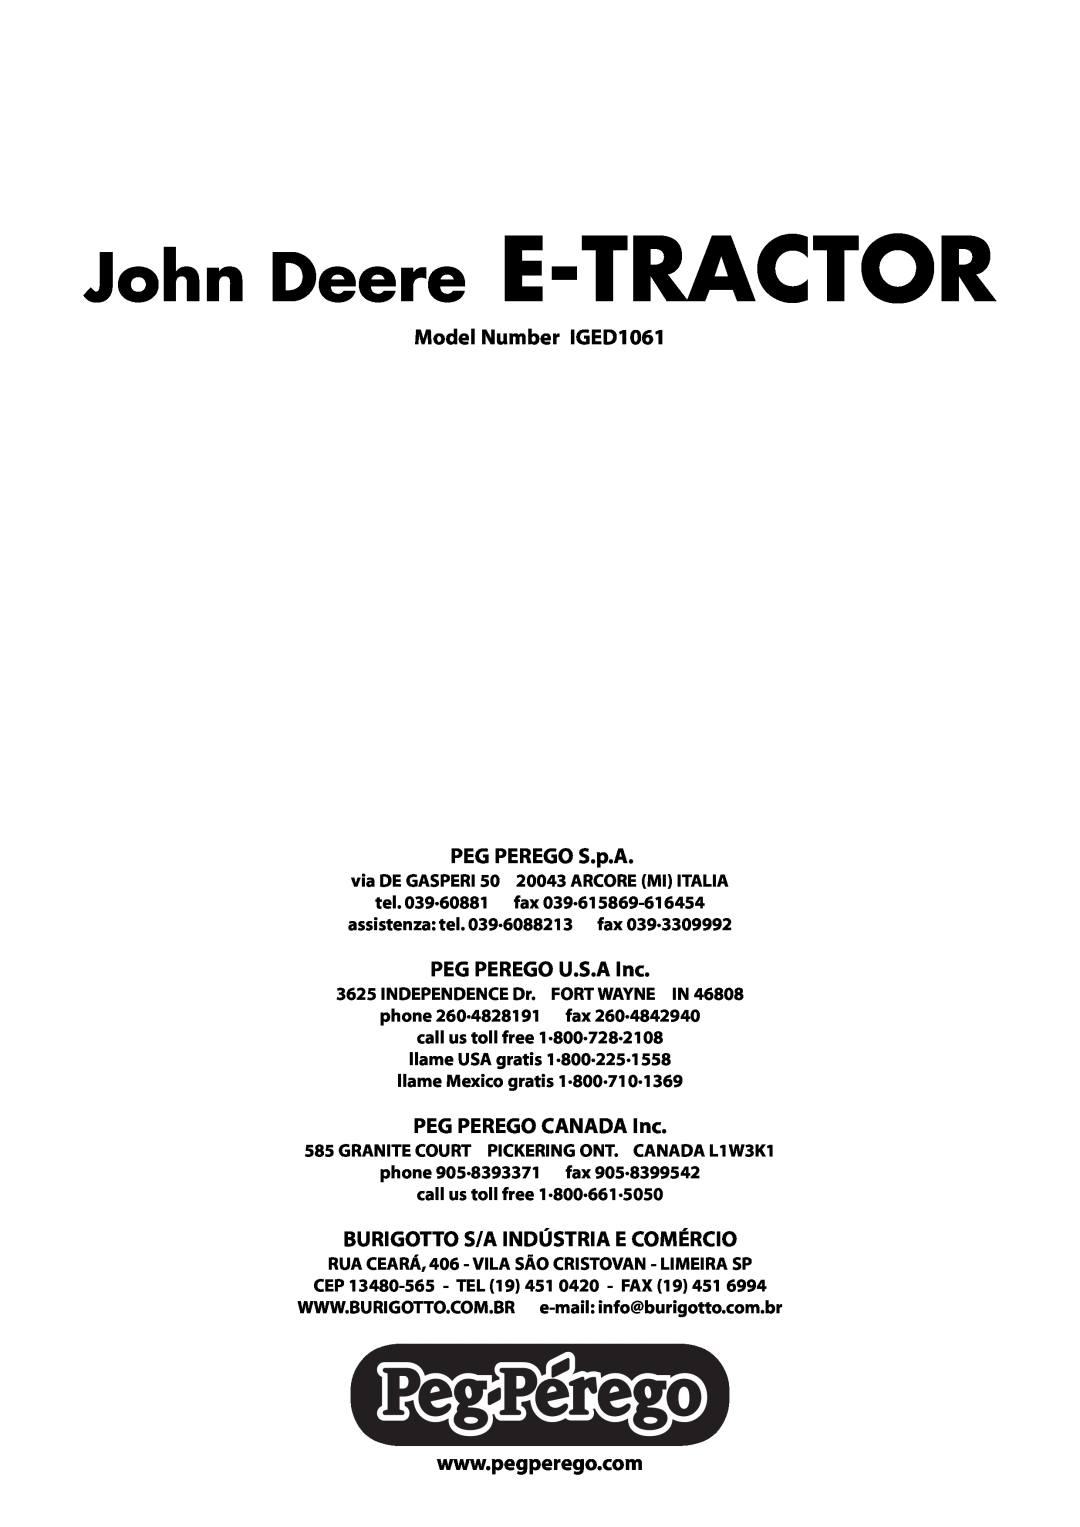 Peg-Perego IGED1061 6V manual John Deere E-TRACTOR, Model Number IGED1061 PEG PEREGO S.p.A, PEG PEREGO U.S.A Inc 